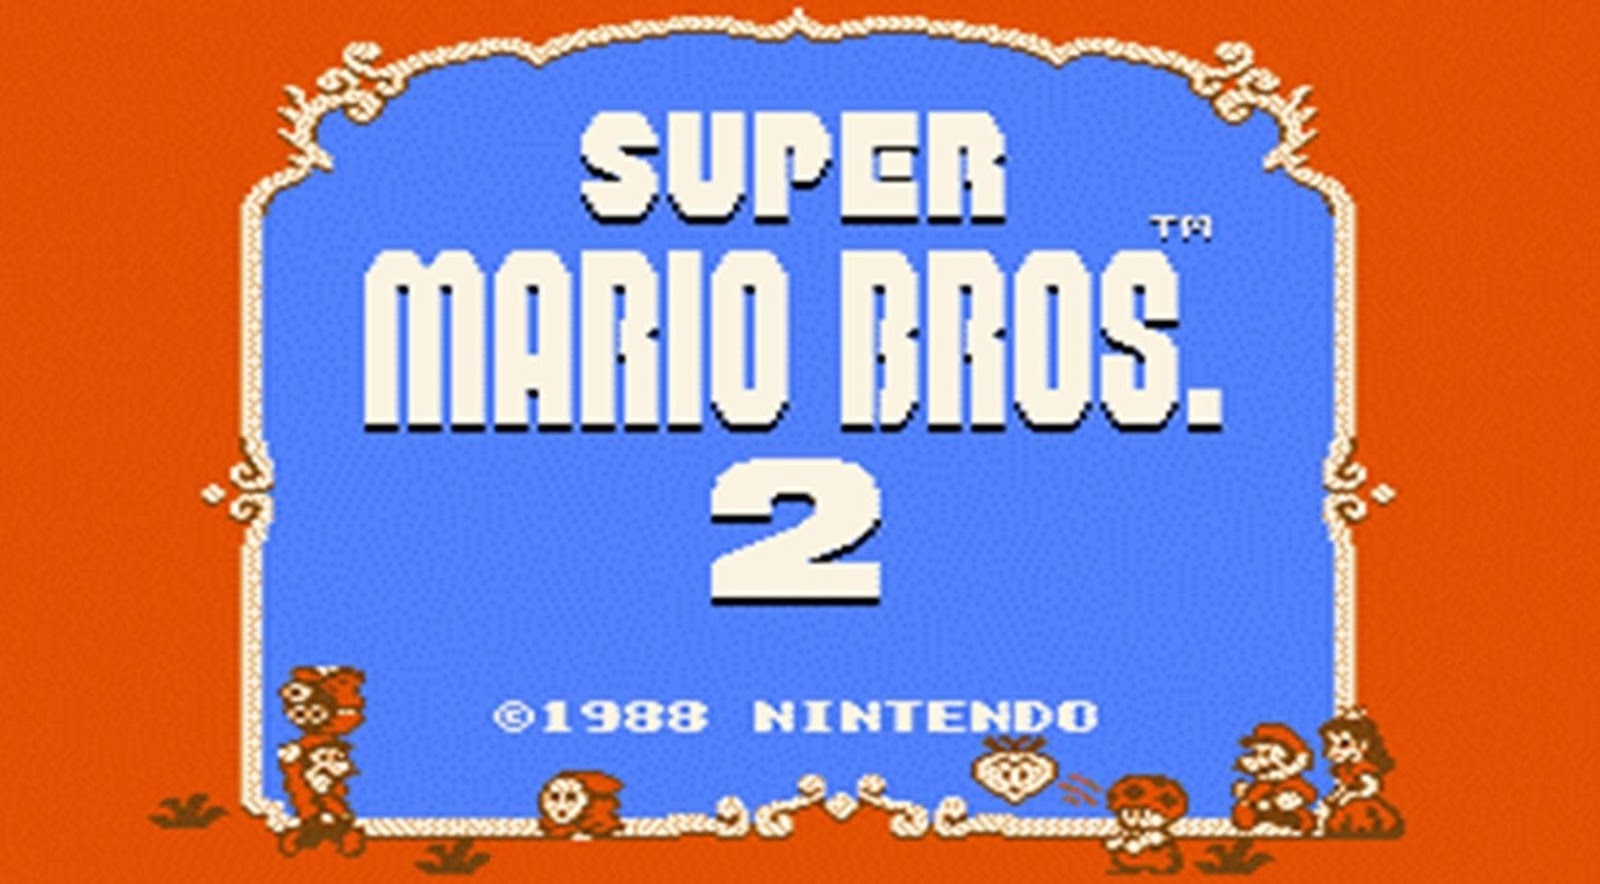 super mario bros 2 online game free